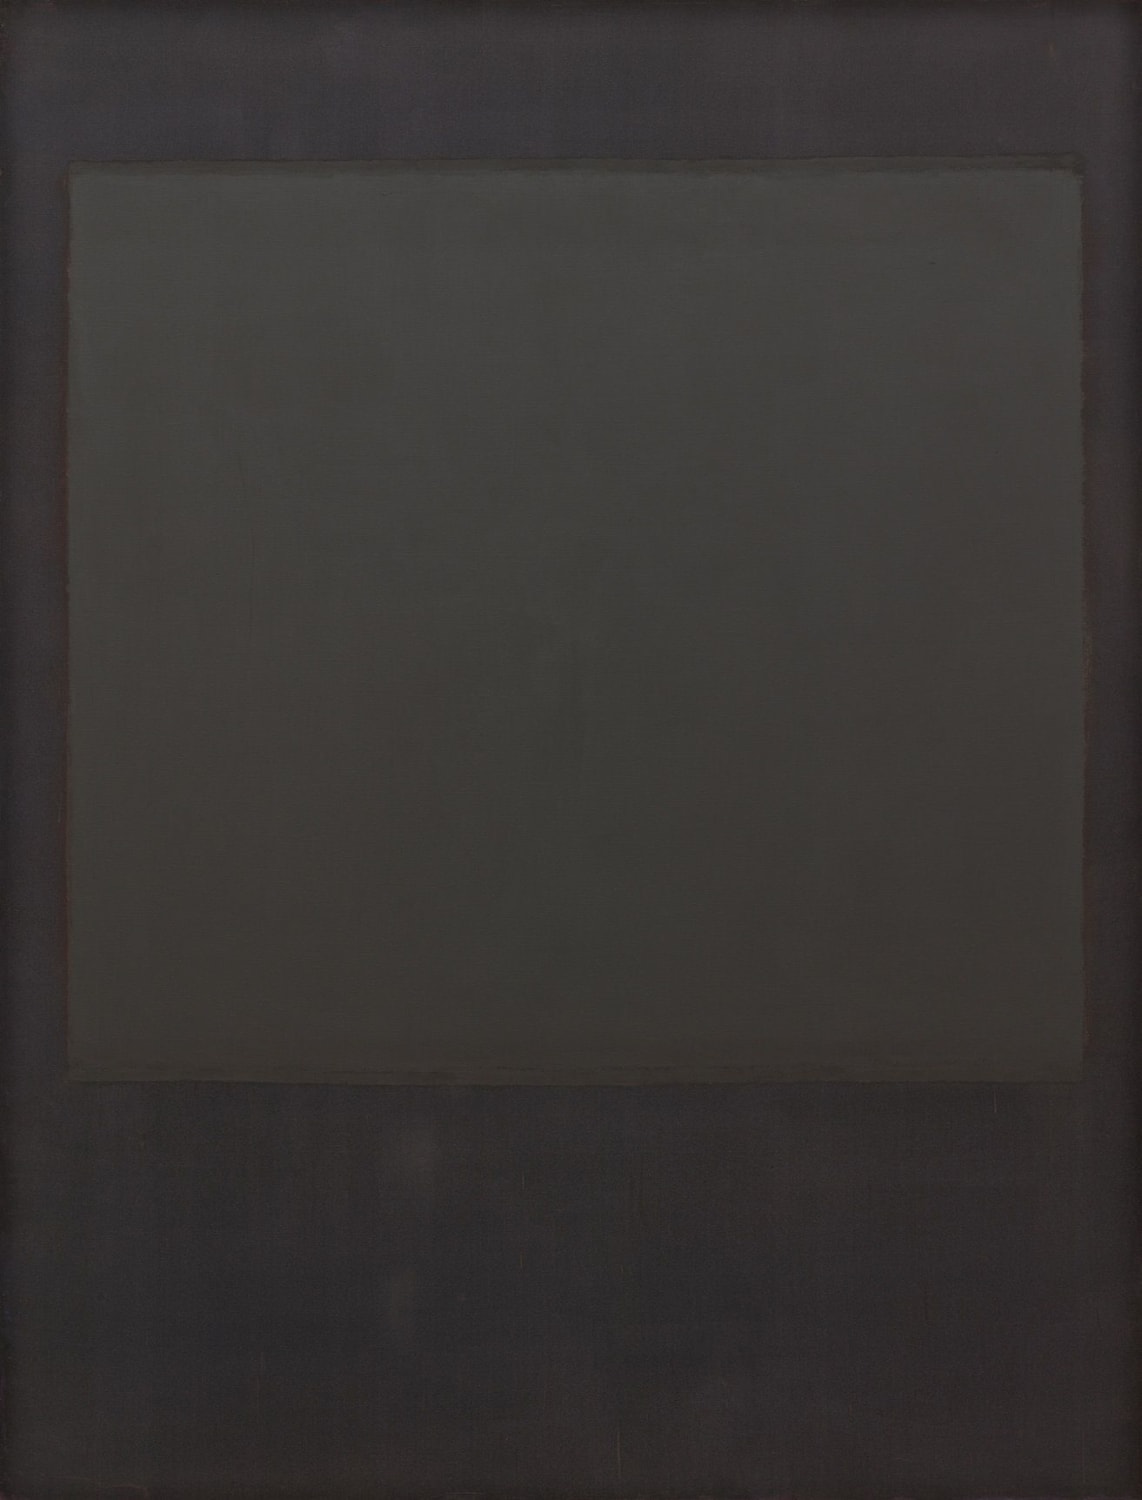 Mark Rothko | National gallery of art, Mark rothko, National gallery